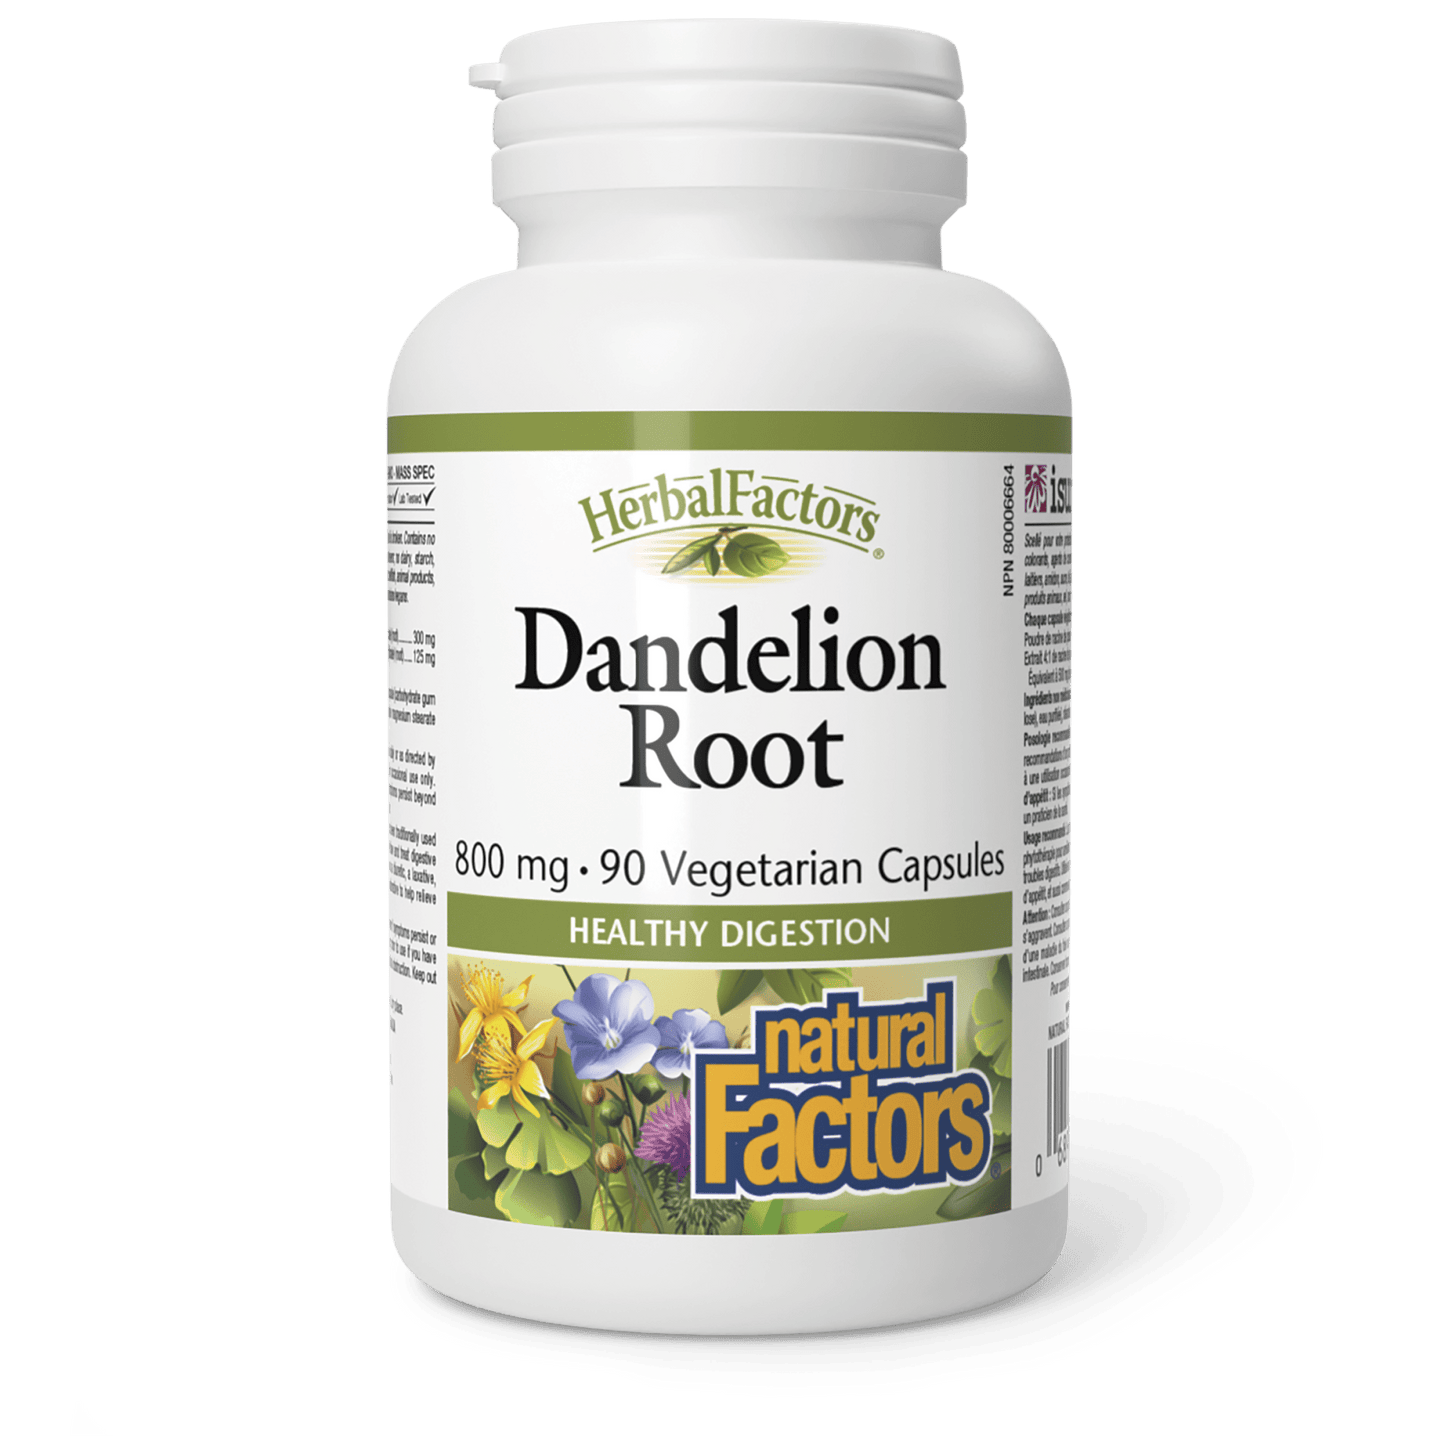 Dandelion Root 800 mg, HerbalFactors, Natural Factors|v|image|4501